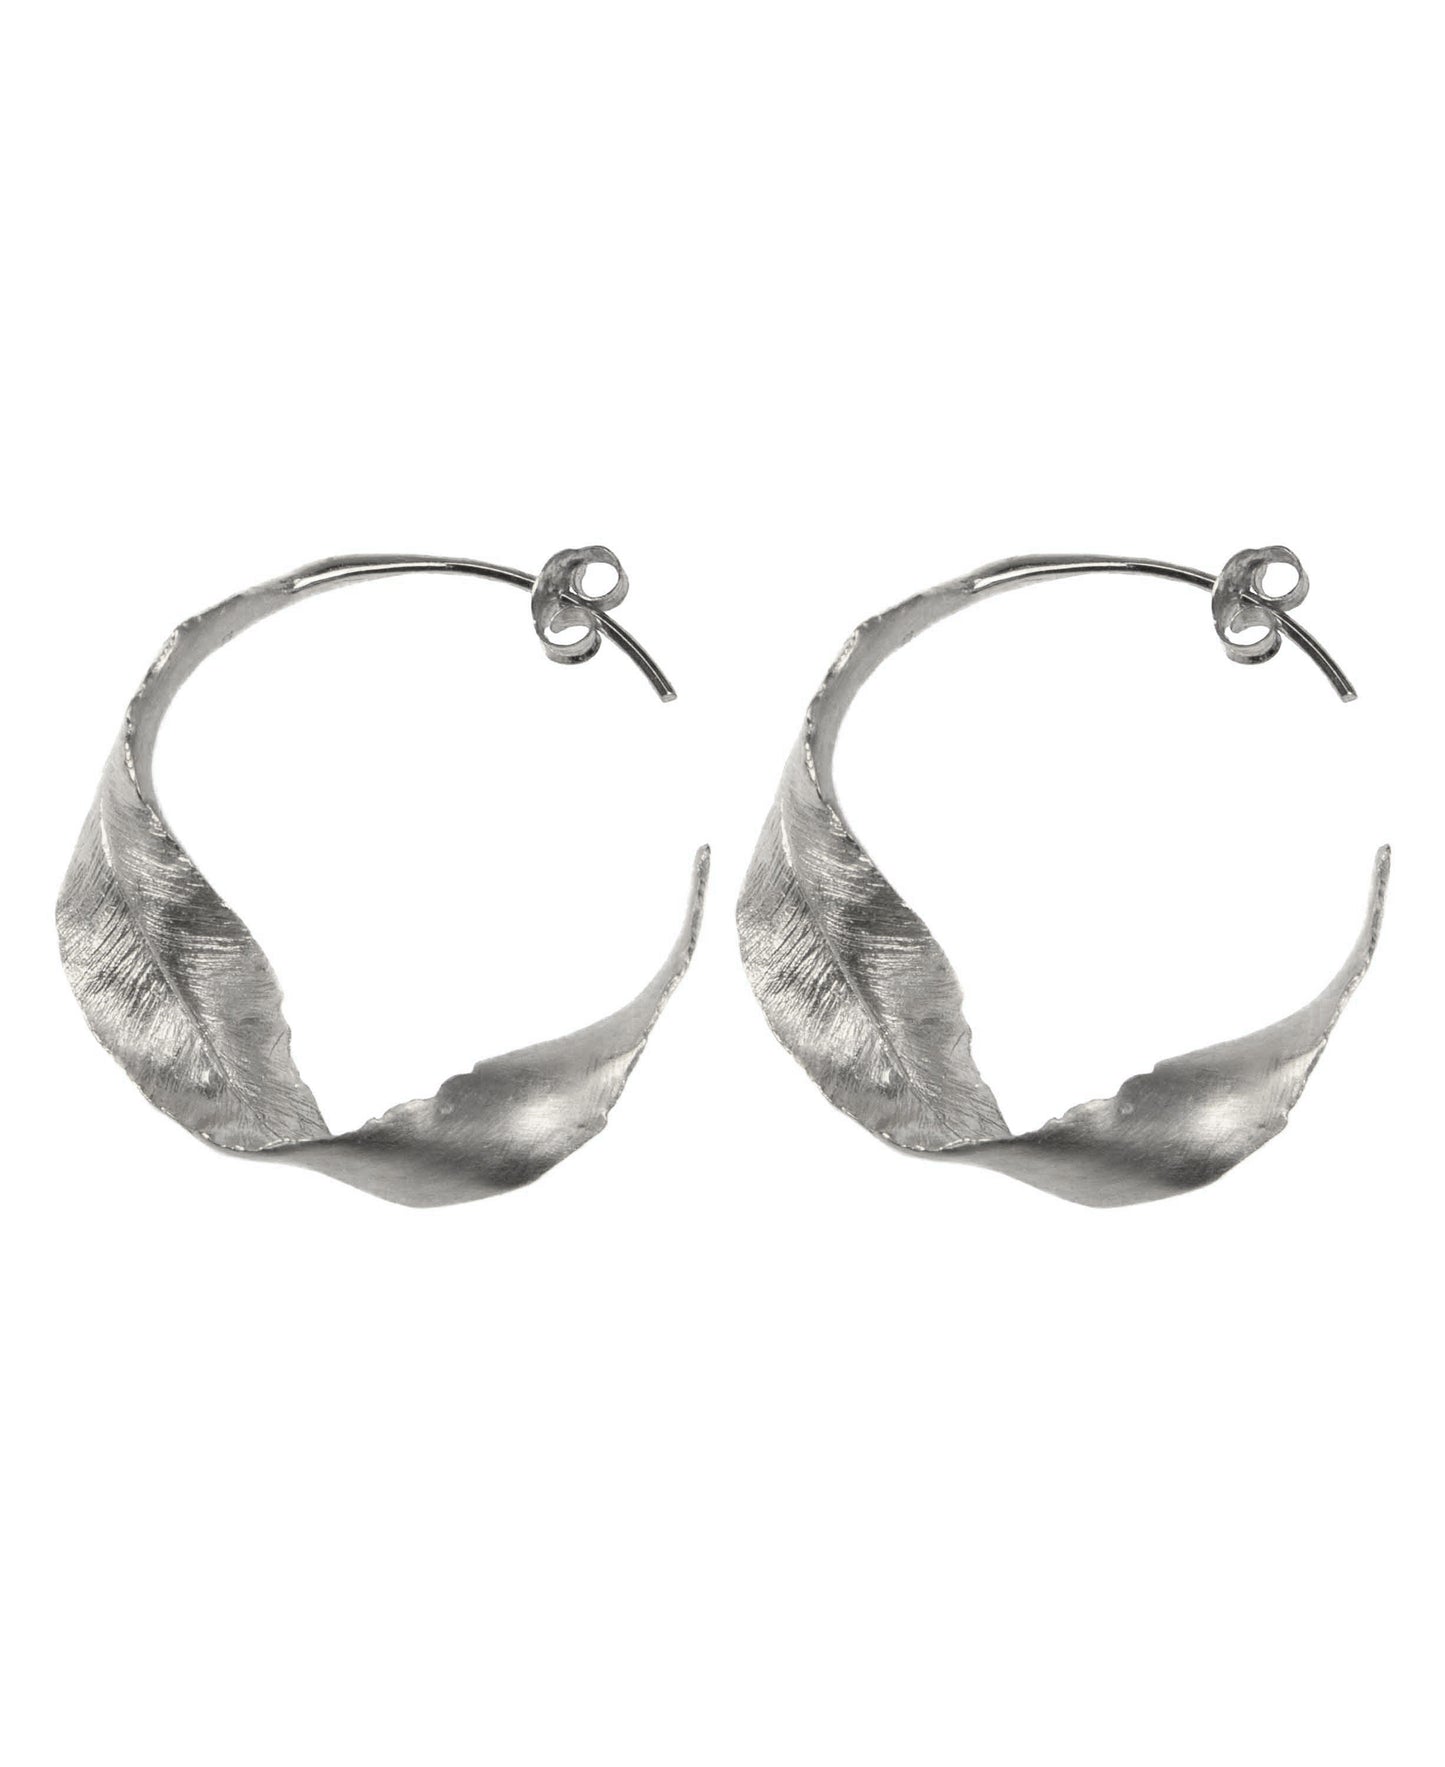 Twisted leaf earrings